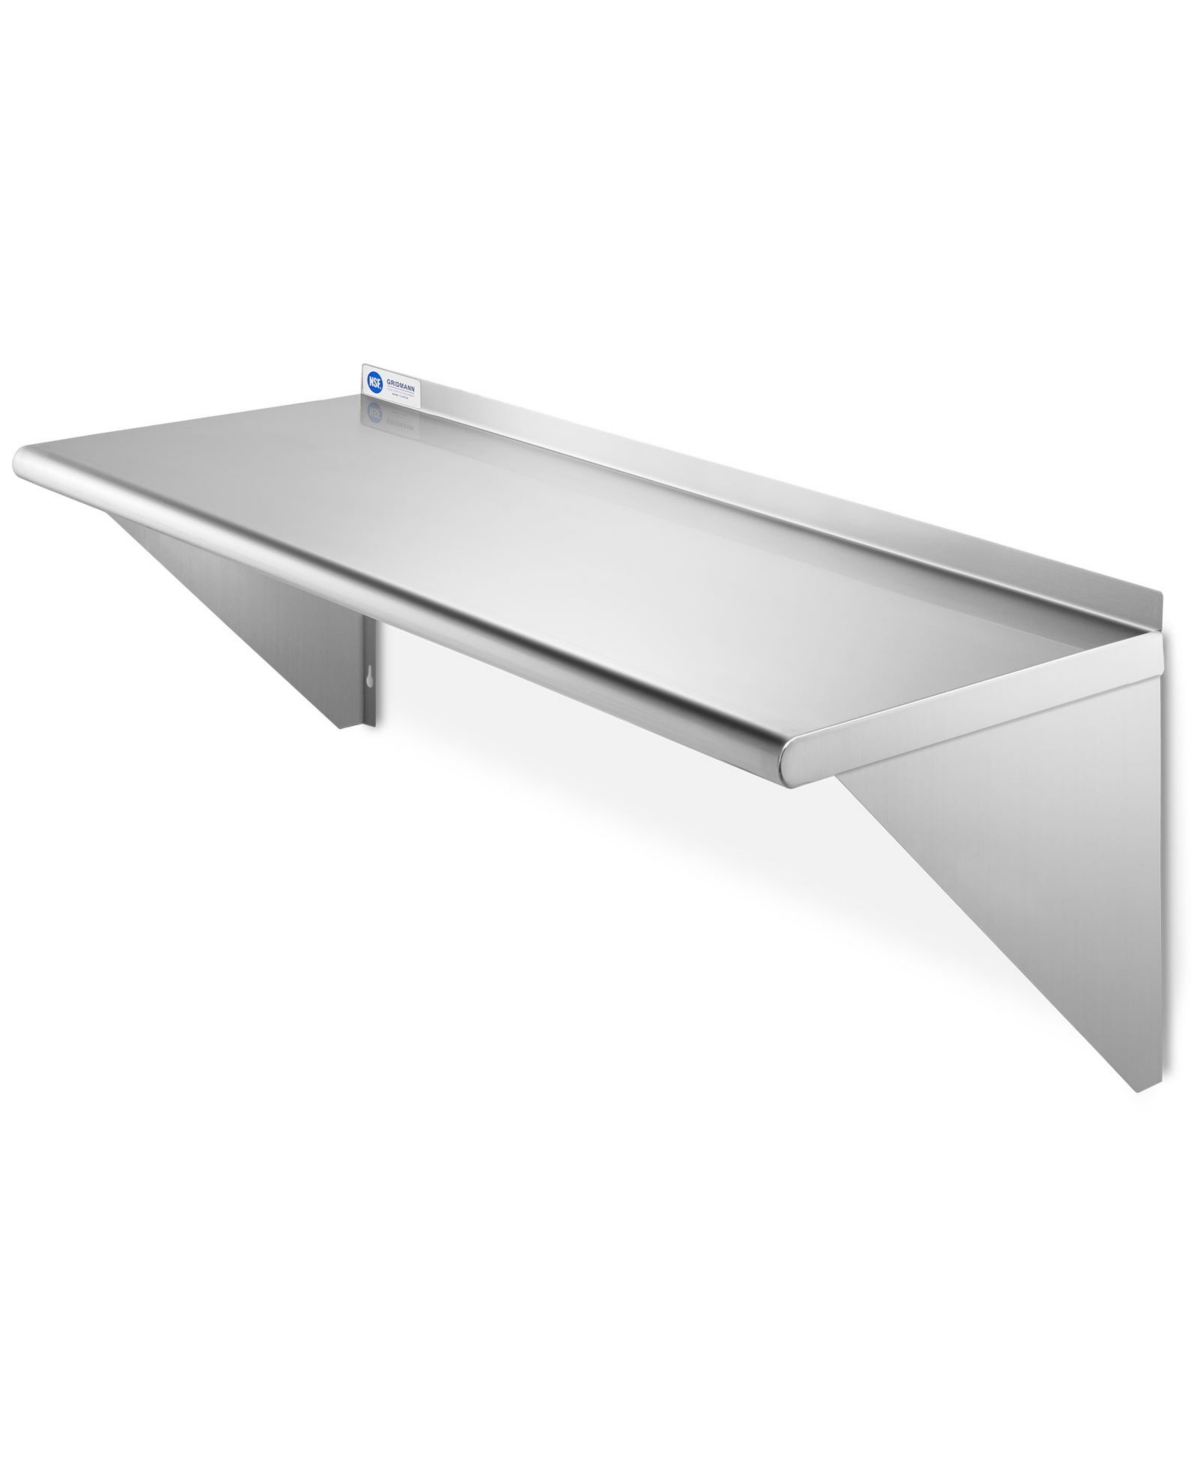 16 Gauge 12" x 36" Nsf Stainless Steel Kitchen Wall Mount Shelf w/ Backsplash - Silver